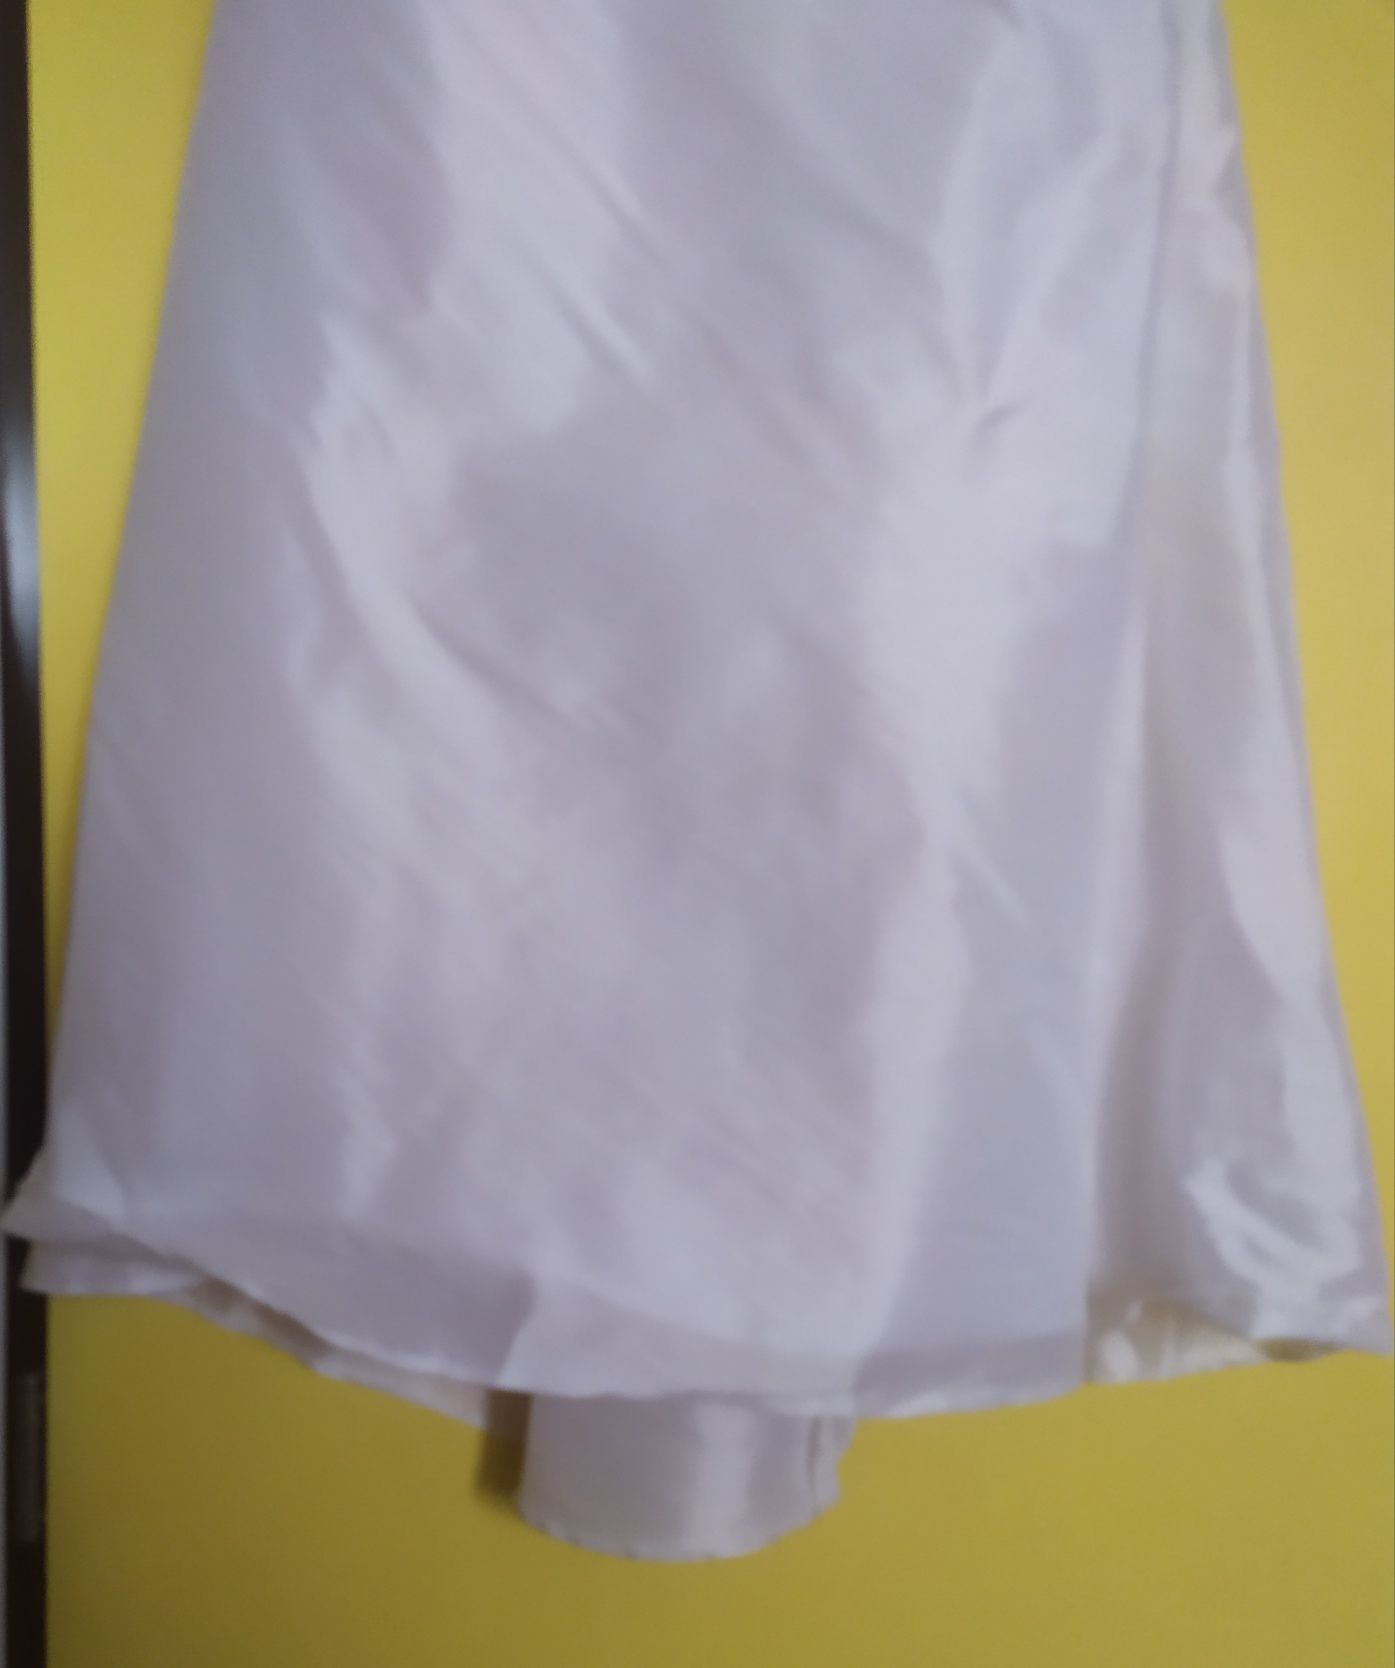 Suknia ślubna biała Agnes Princessa rozmiar XS/34